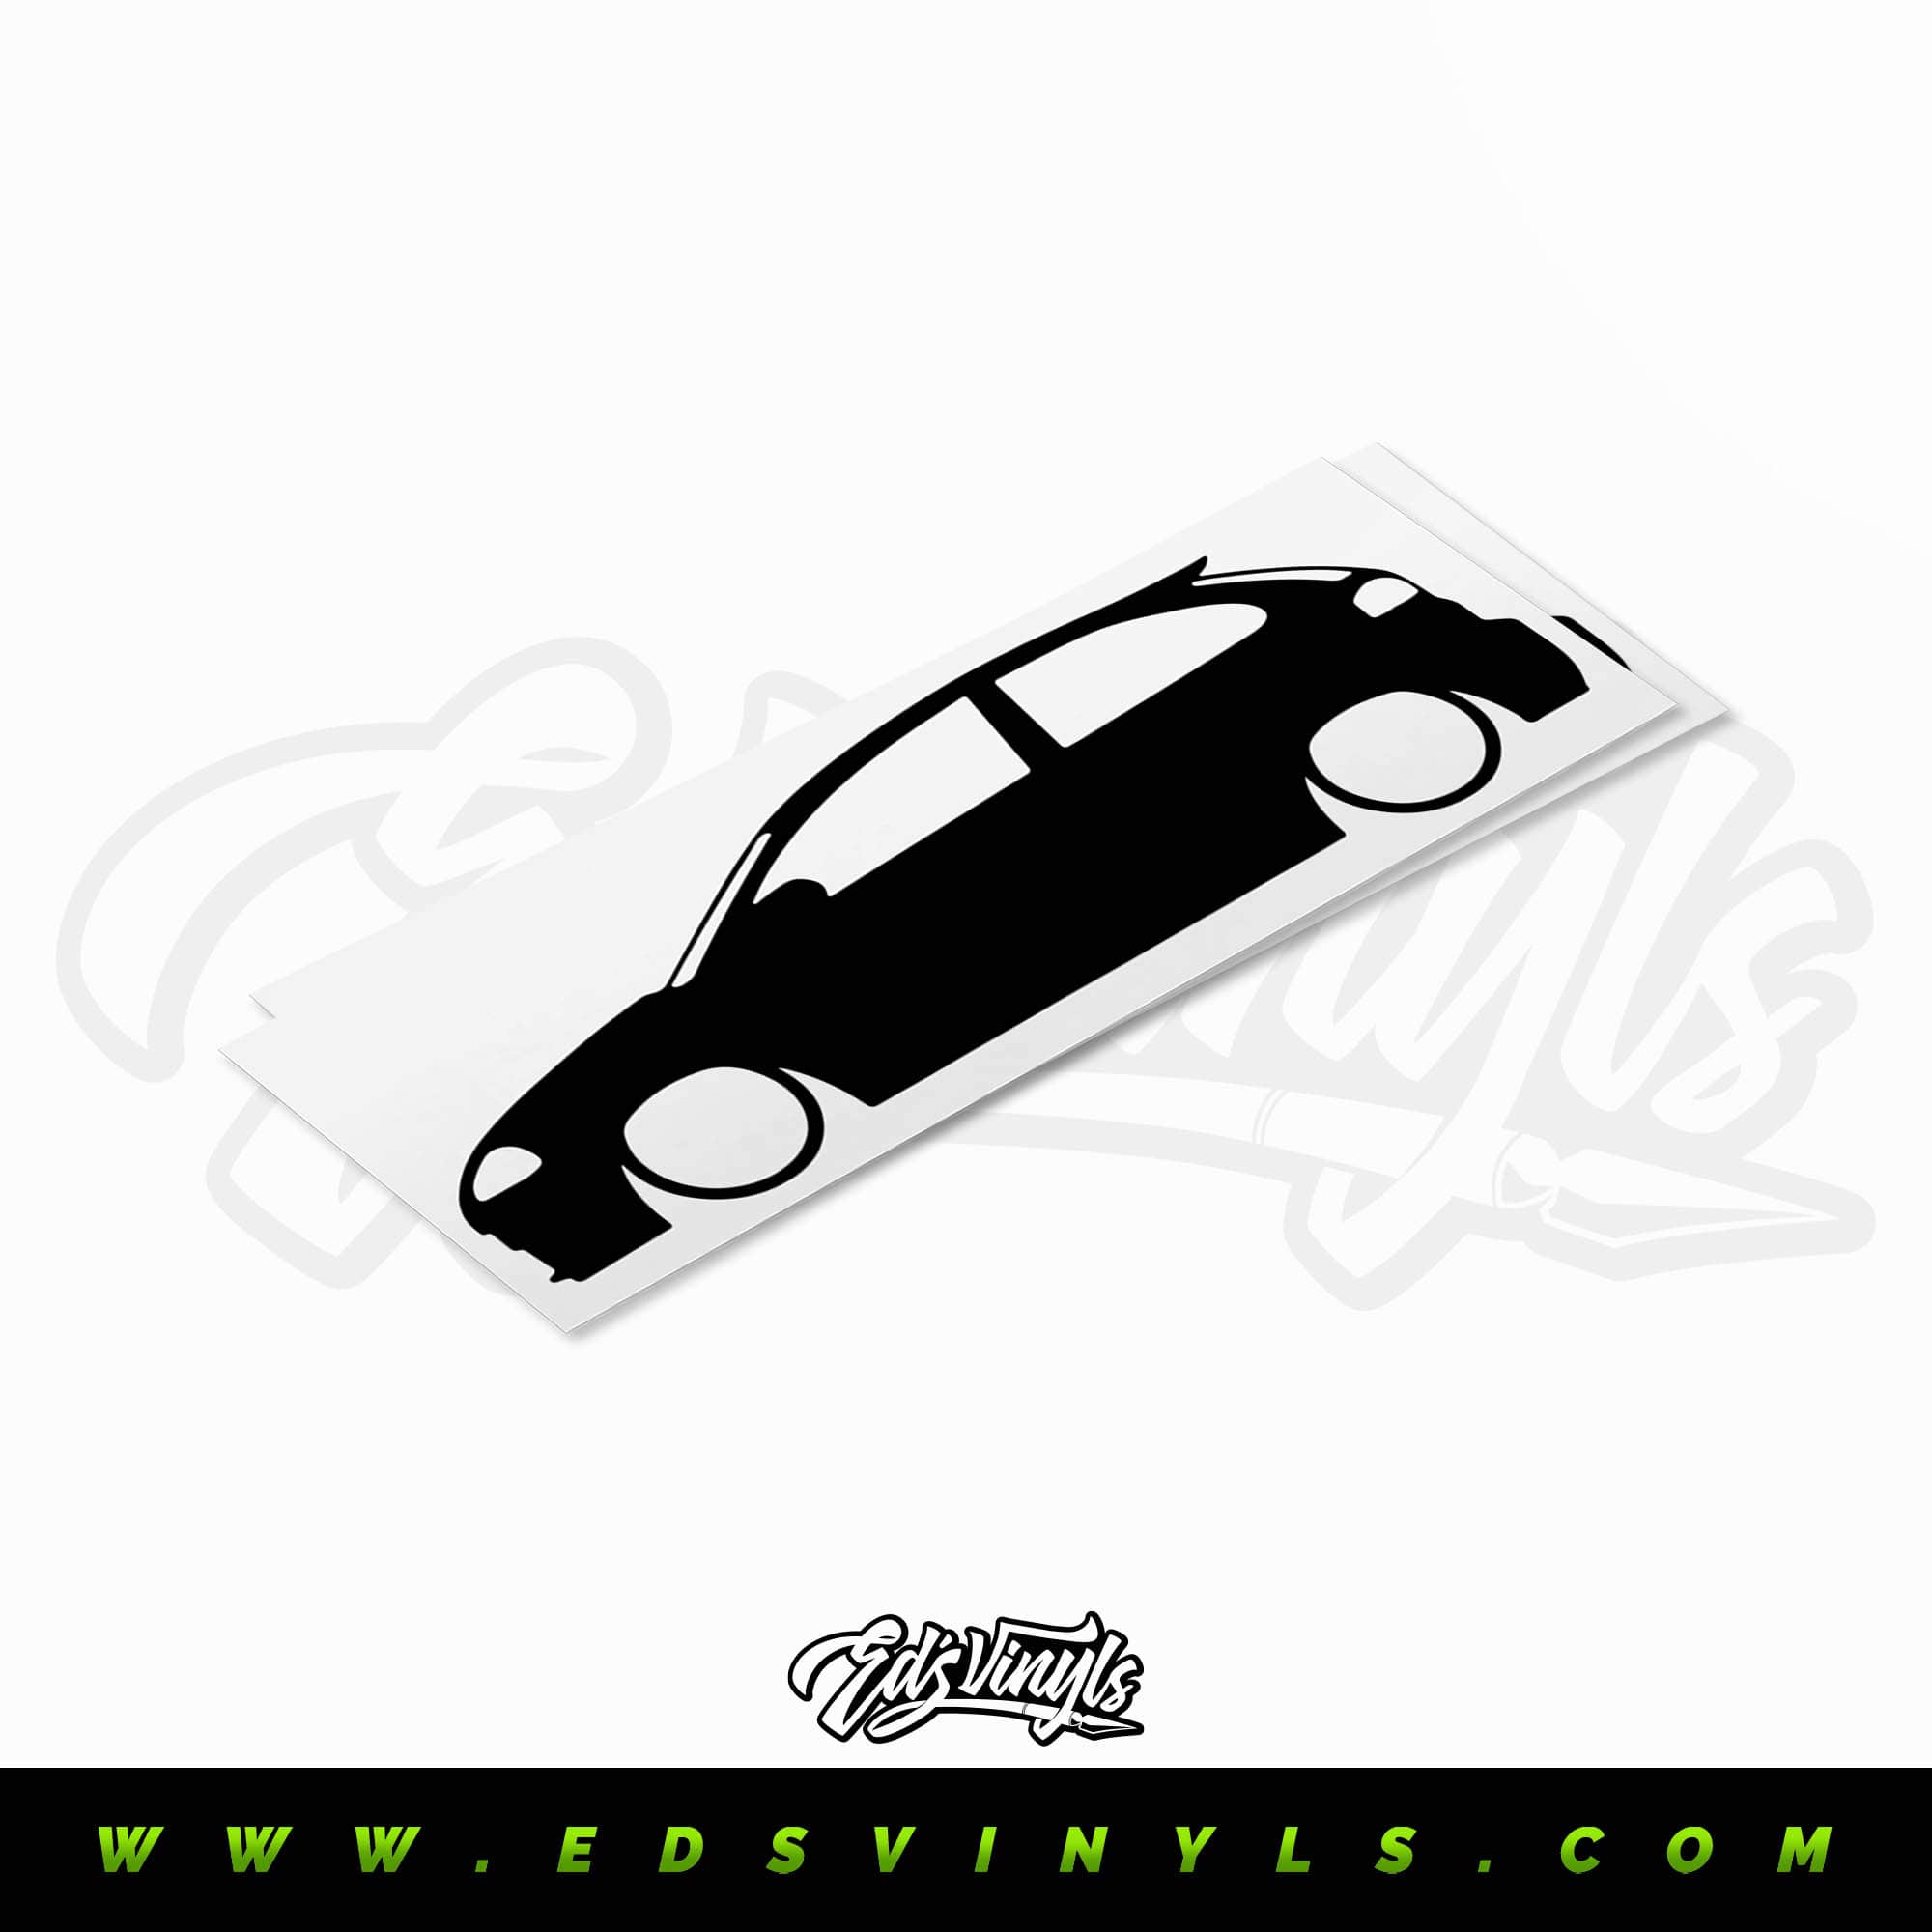 Silueta trasera SEAT Ibiza 6L - Edsvinyls